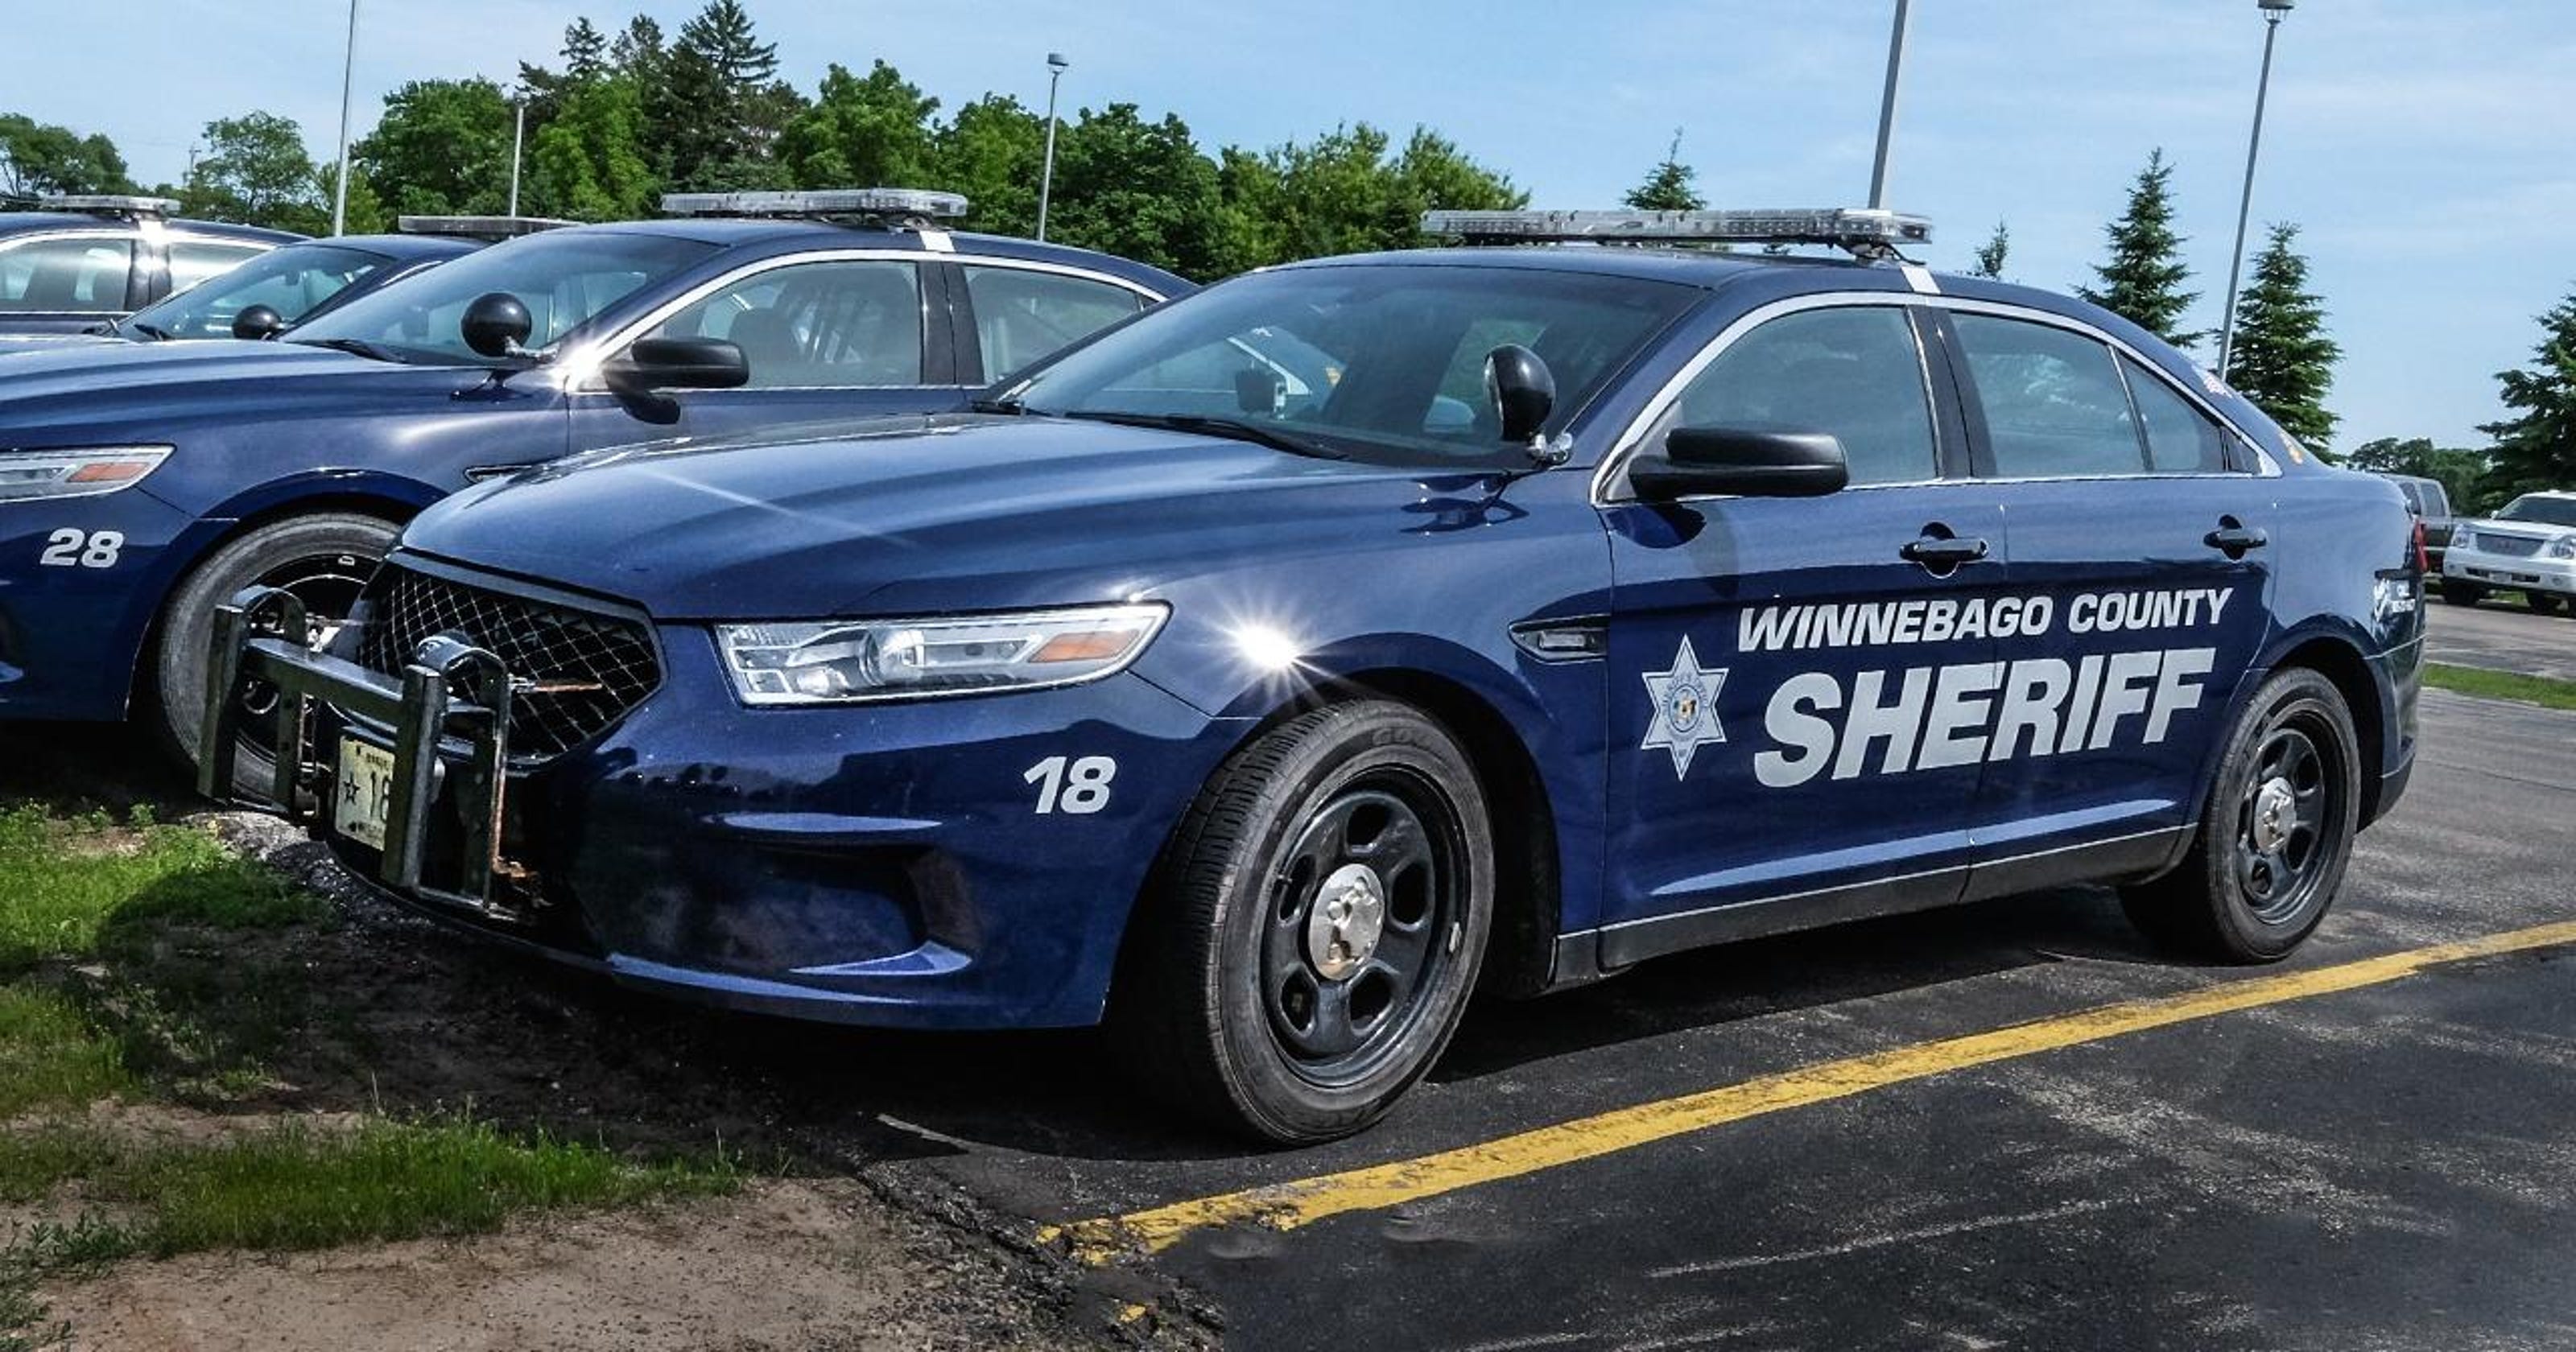 Office Car Porn - Sheriff's Office arrests man for child porn possession